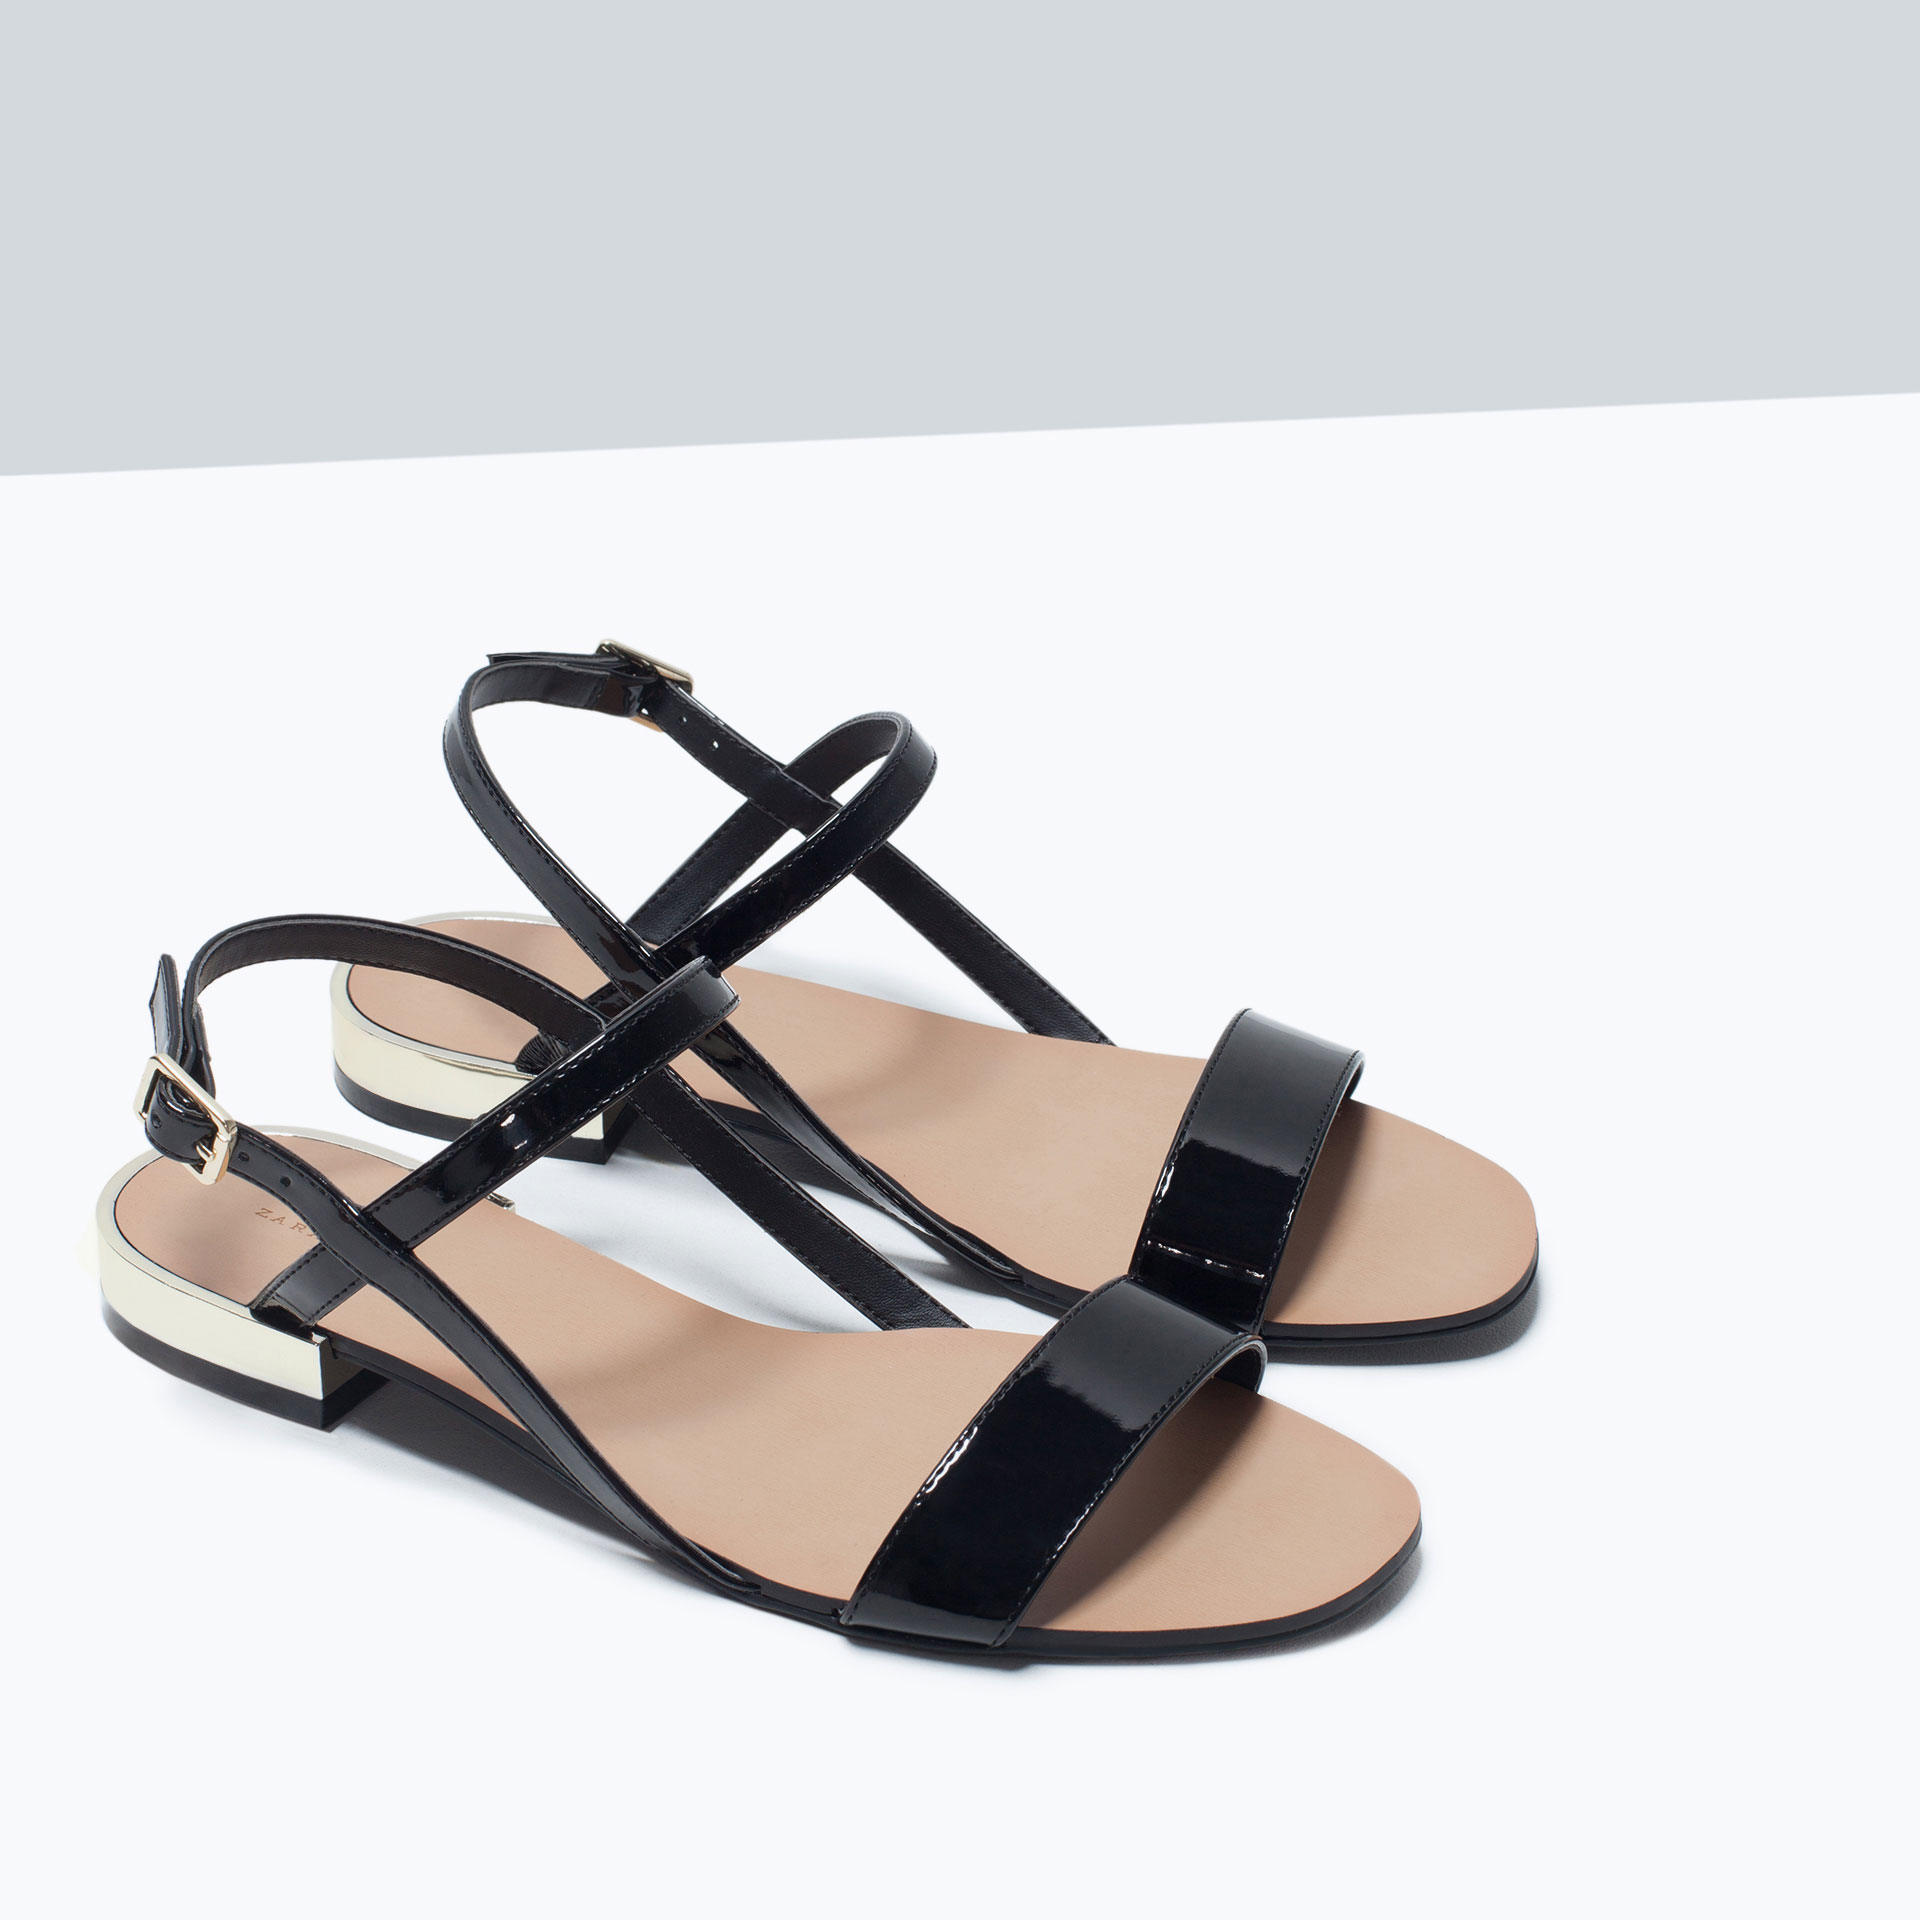 Zara Flat Sandals 2017 Online Sale, UP TO 63% OFF